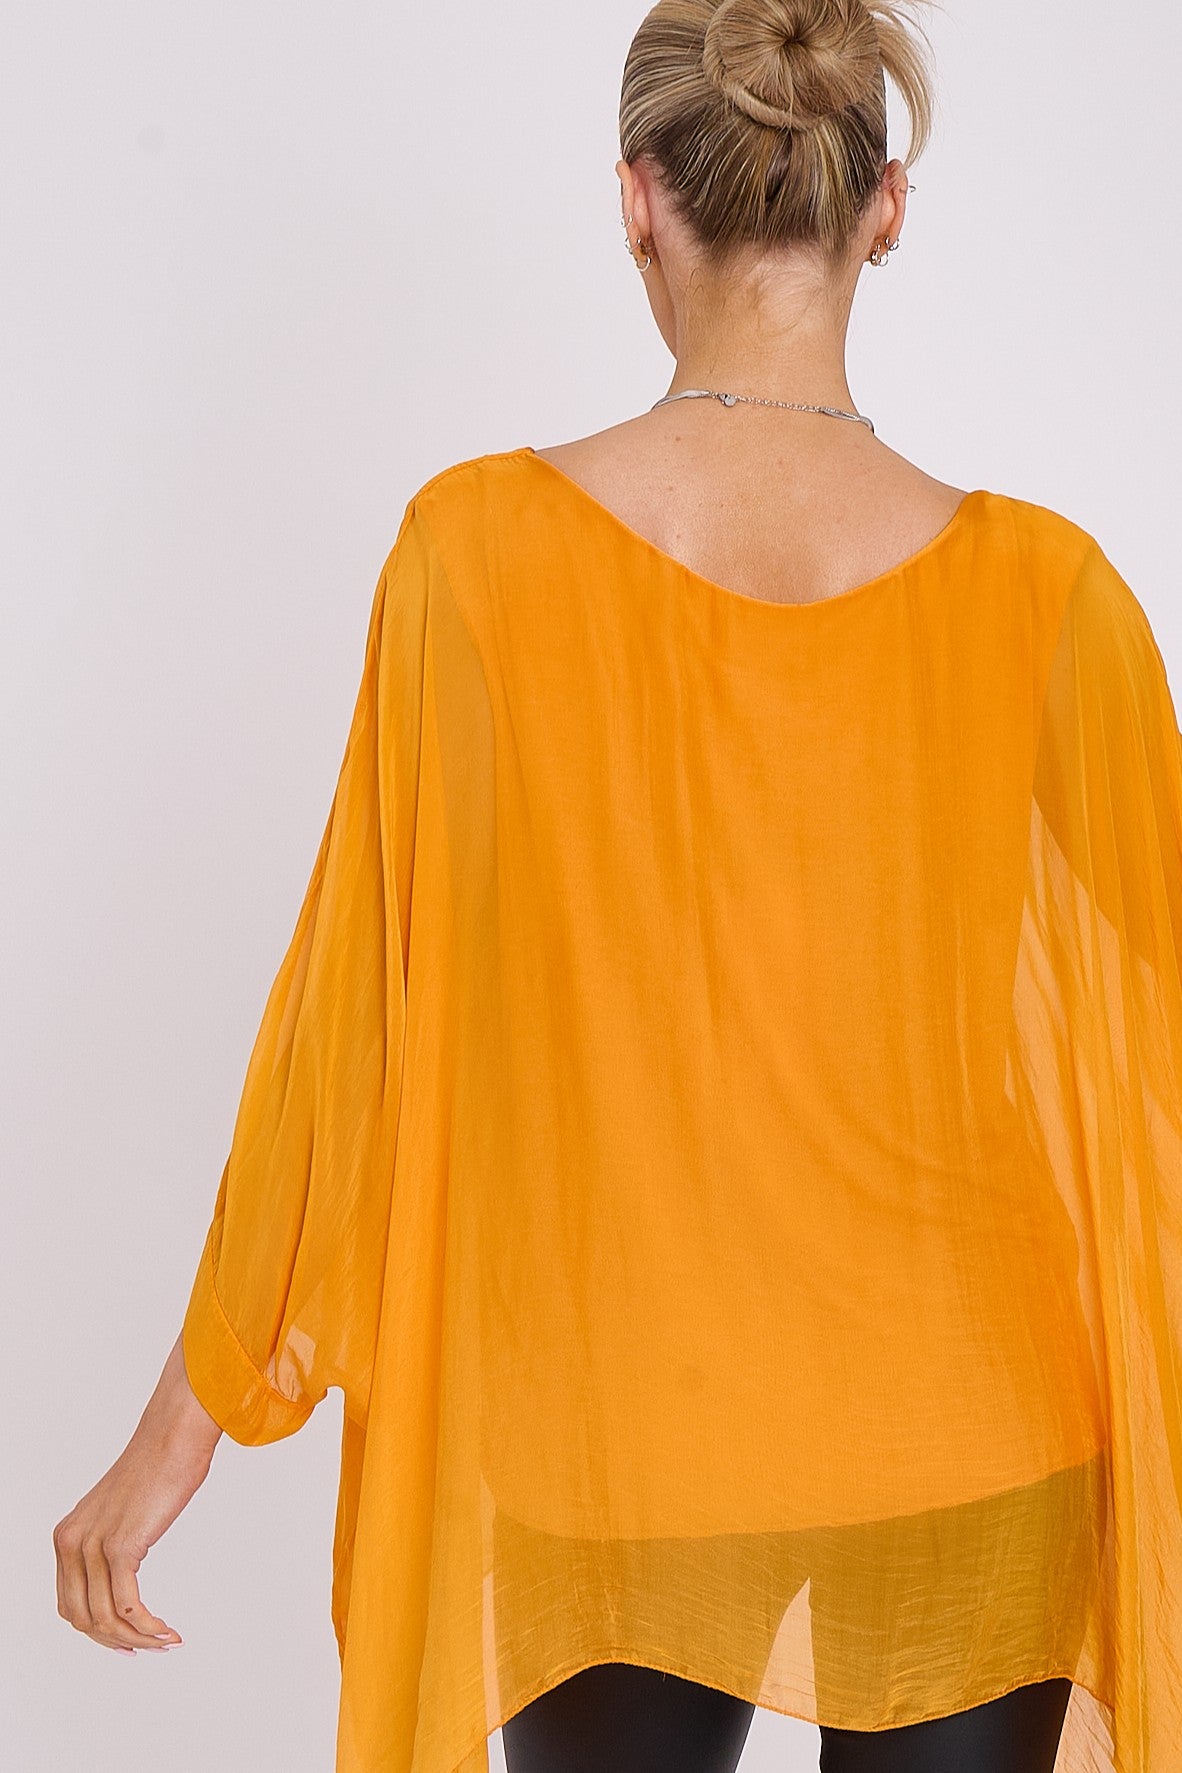 Orange Silk Batwing Sleeve Top Blouse JASMINE